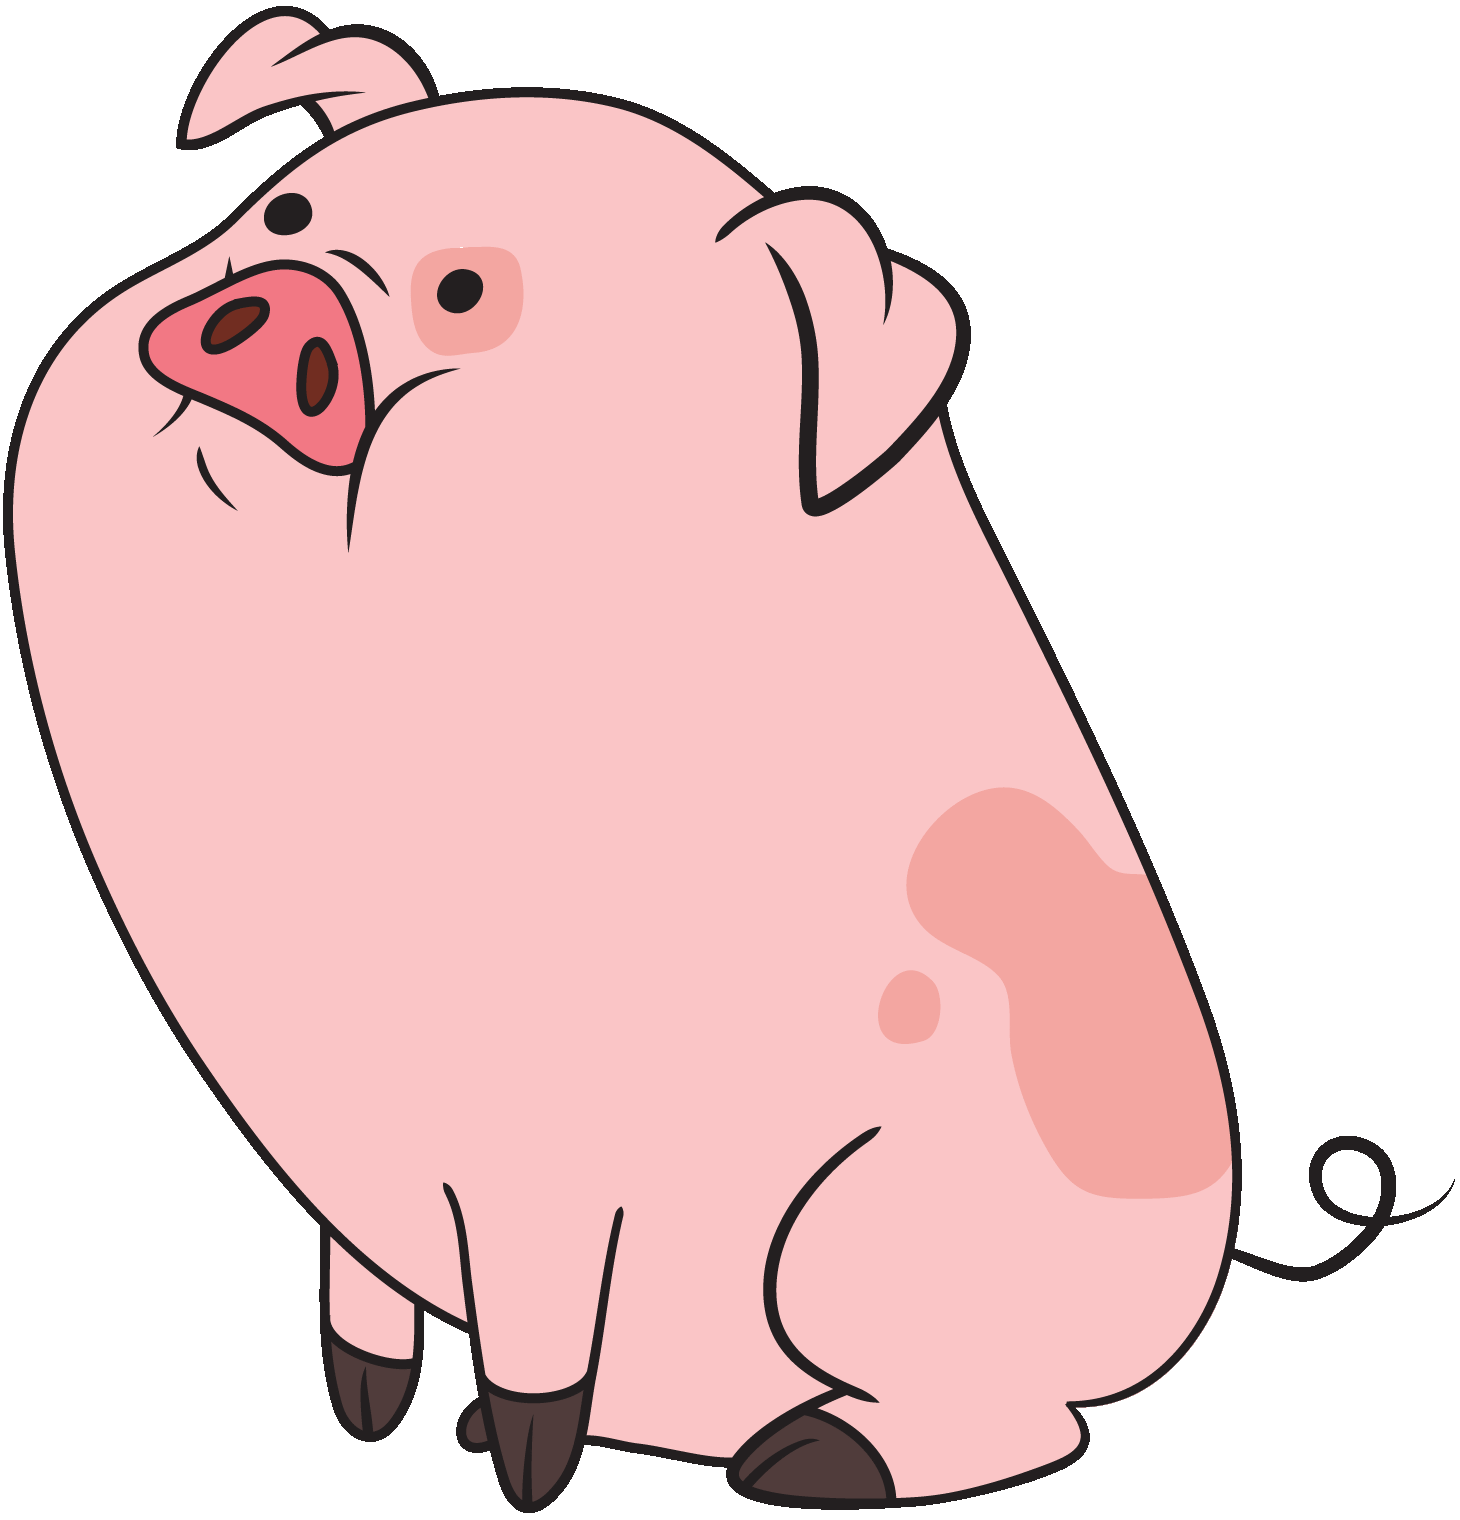 Pink Pig Cartoon